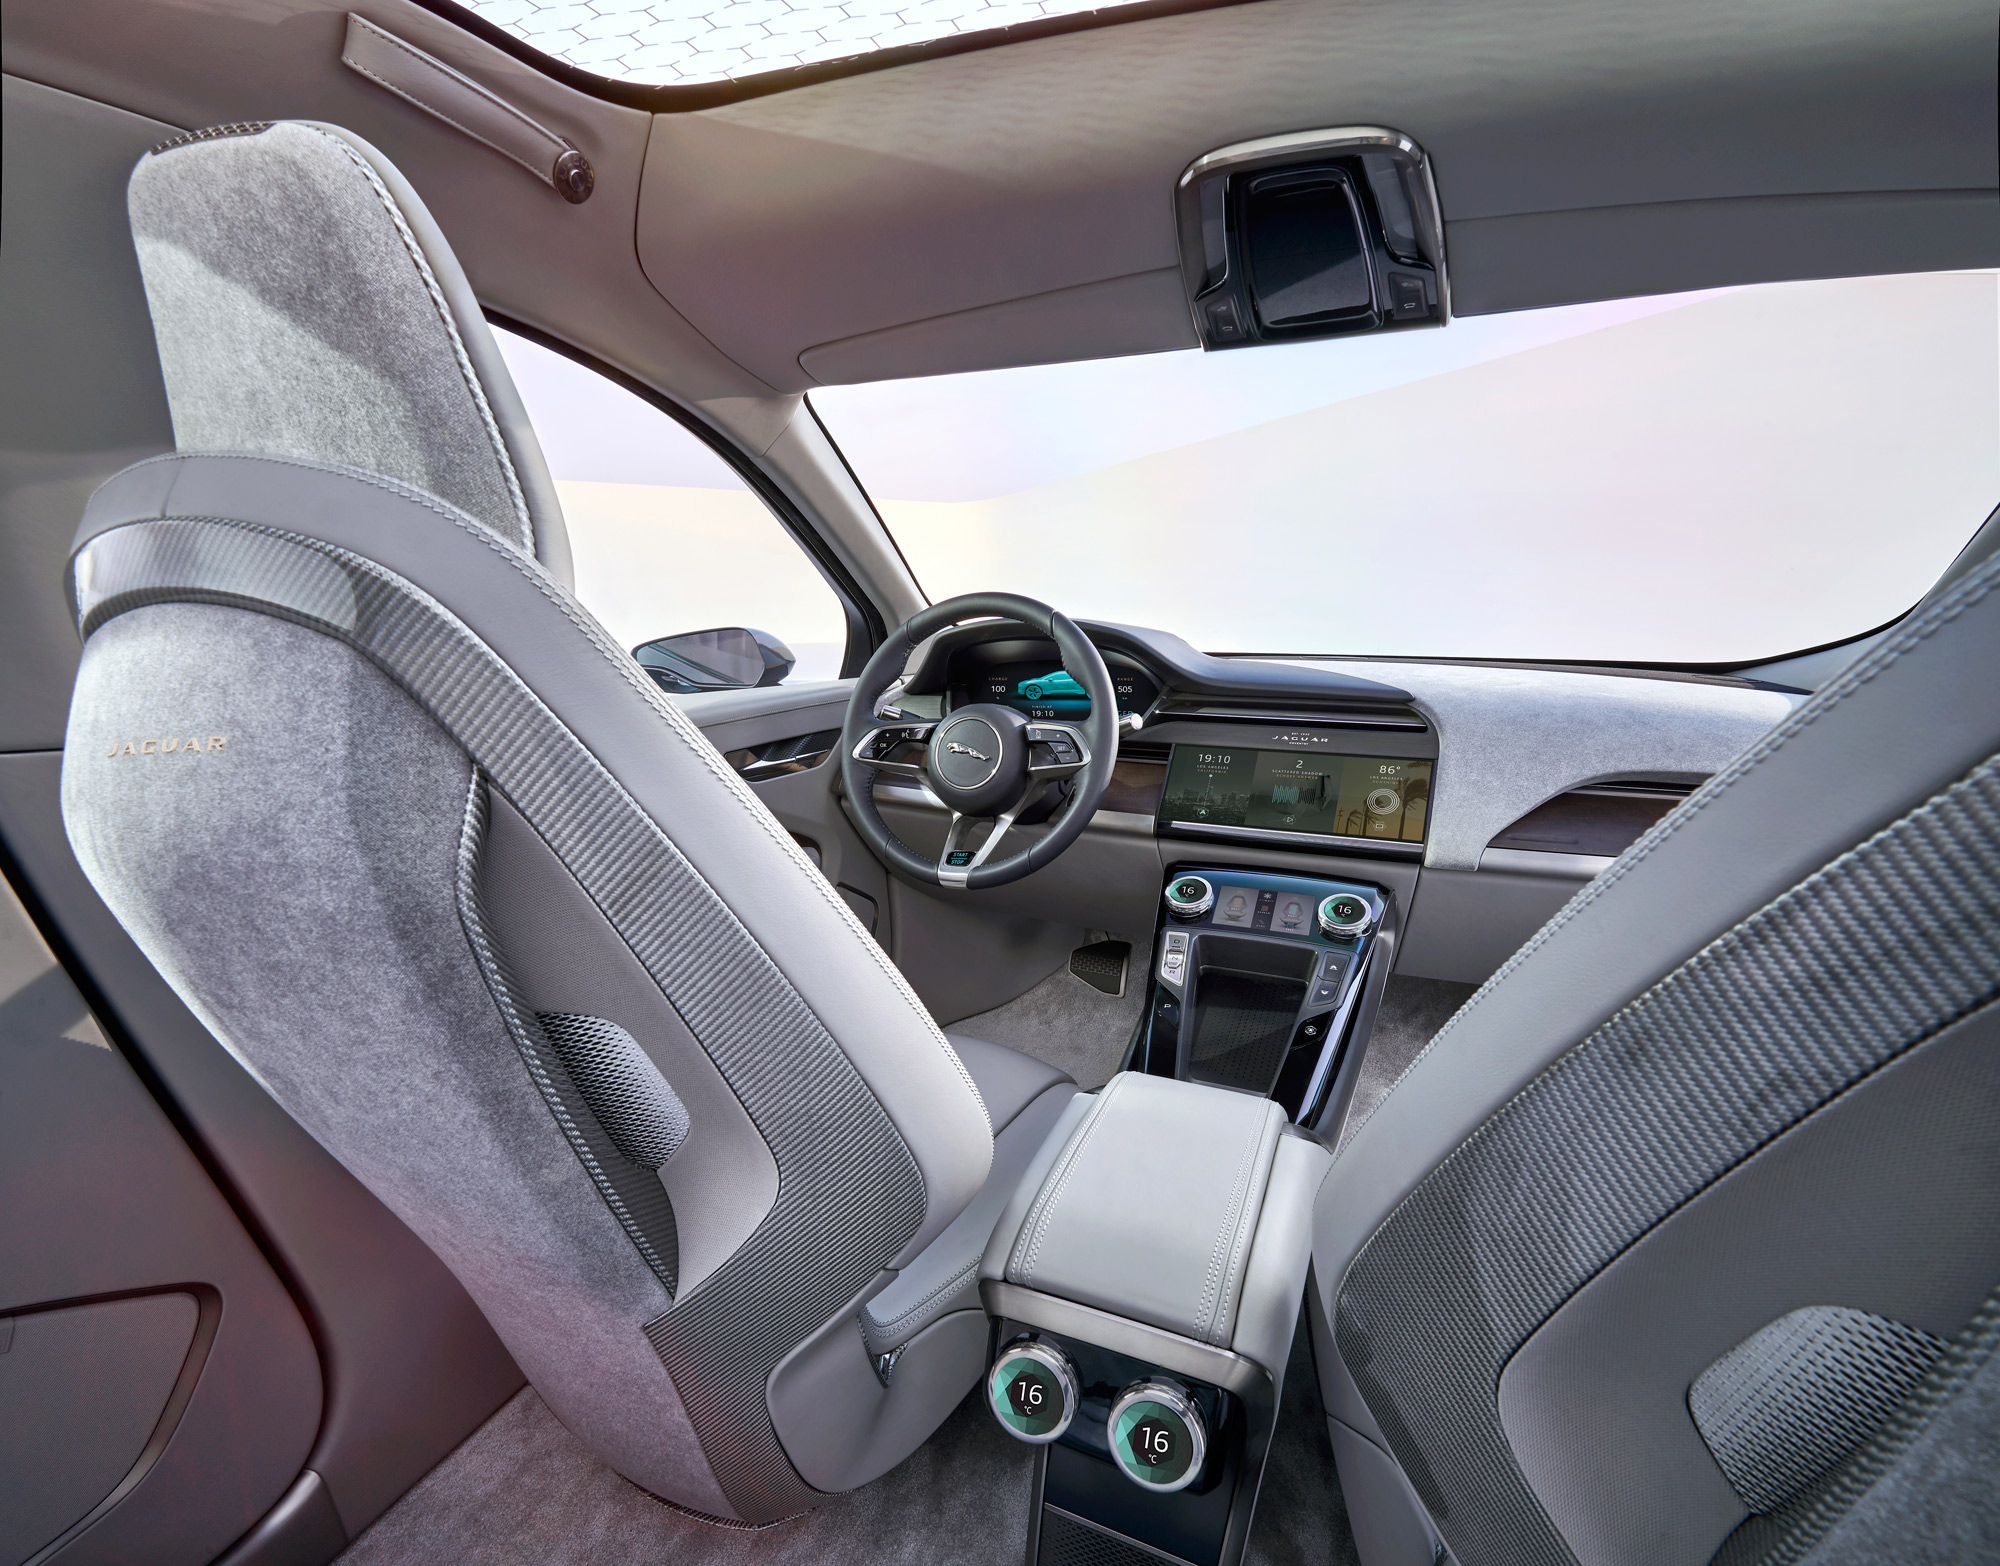 Jaguar I-PACE Concept interior